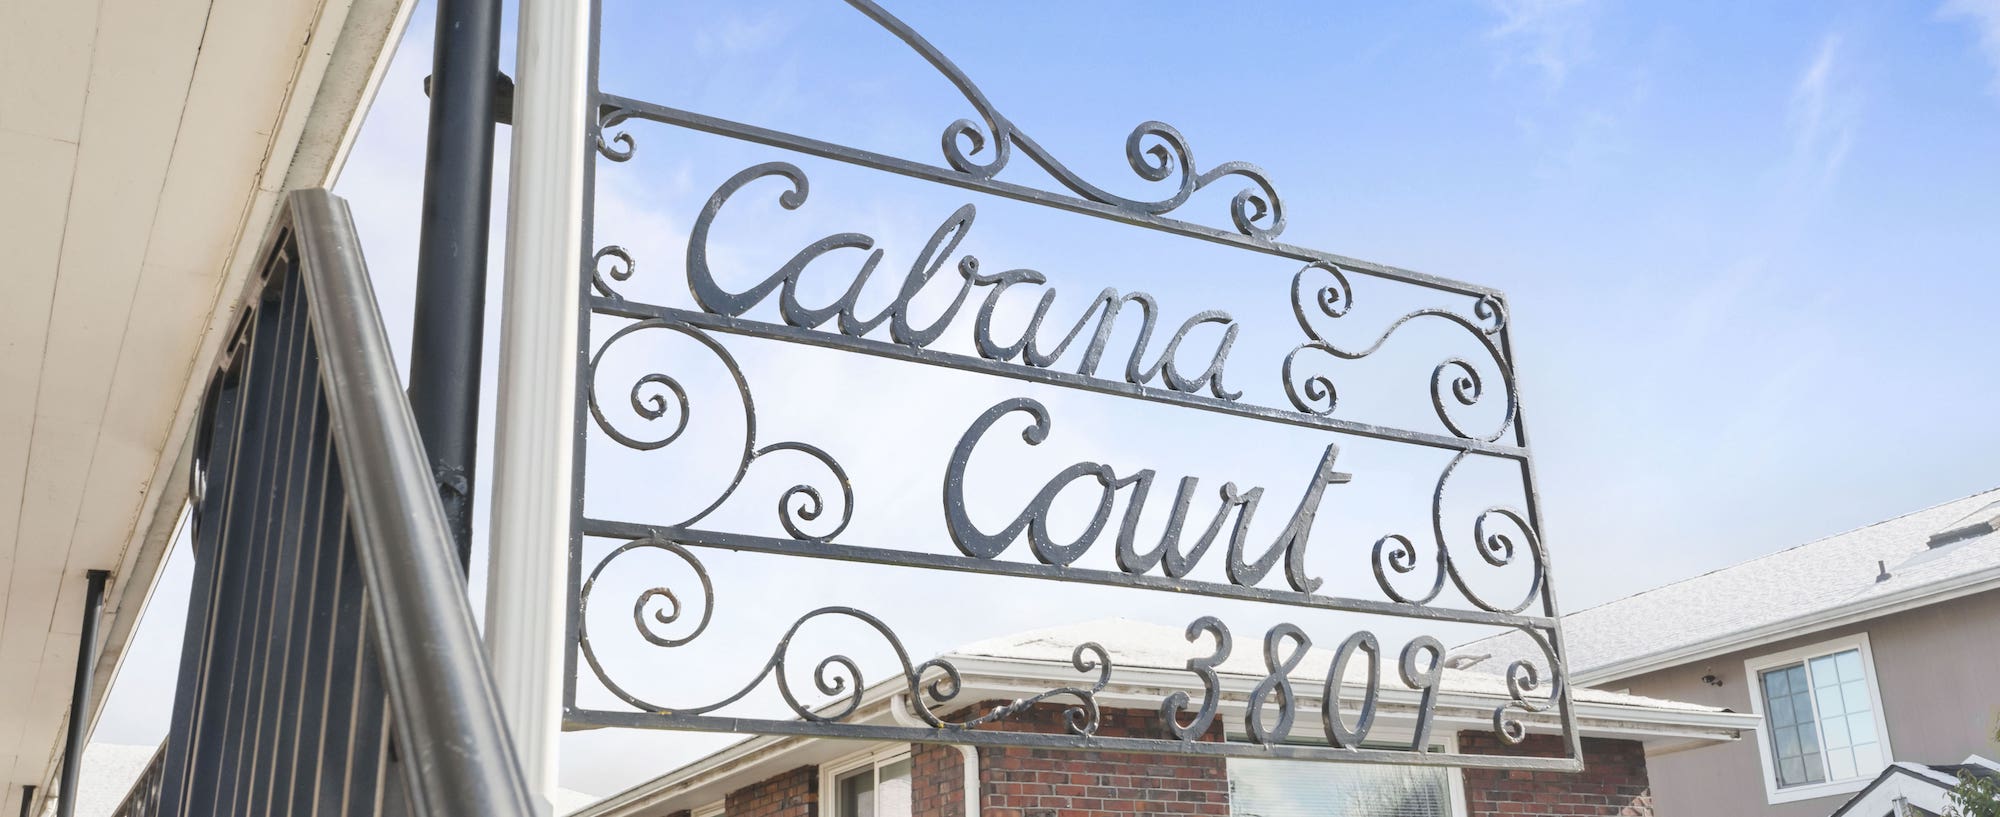 Cabana Court Banner Image